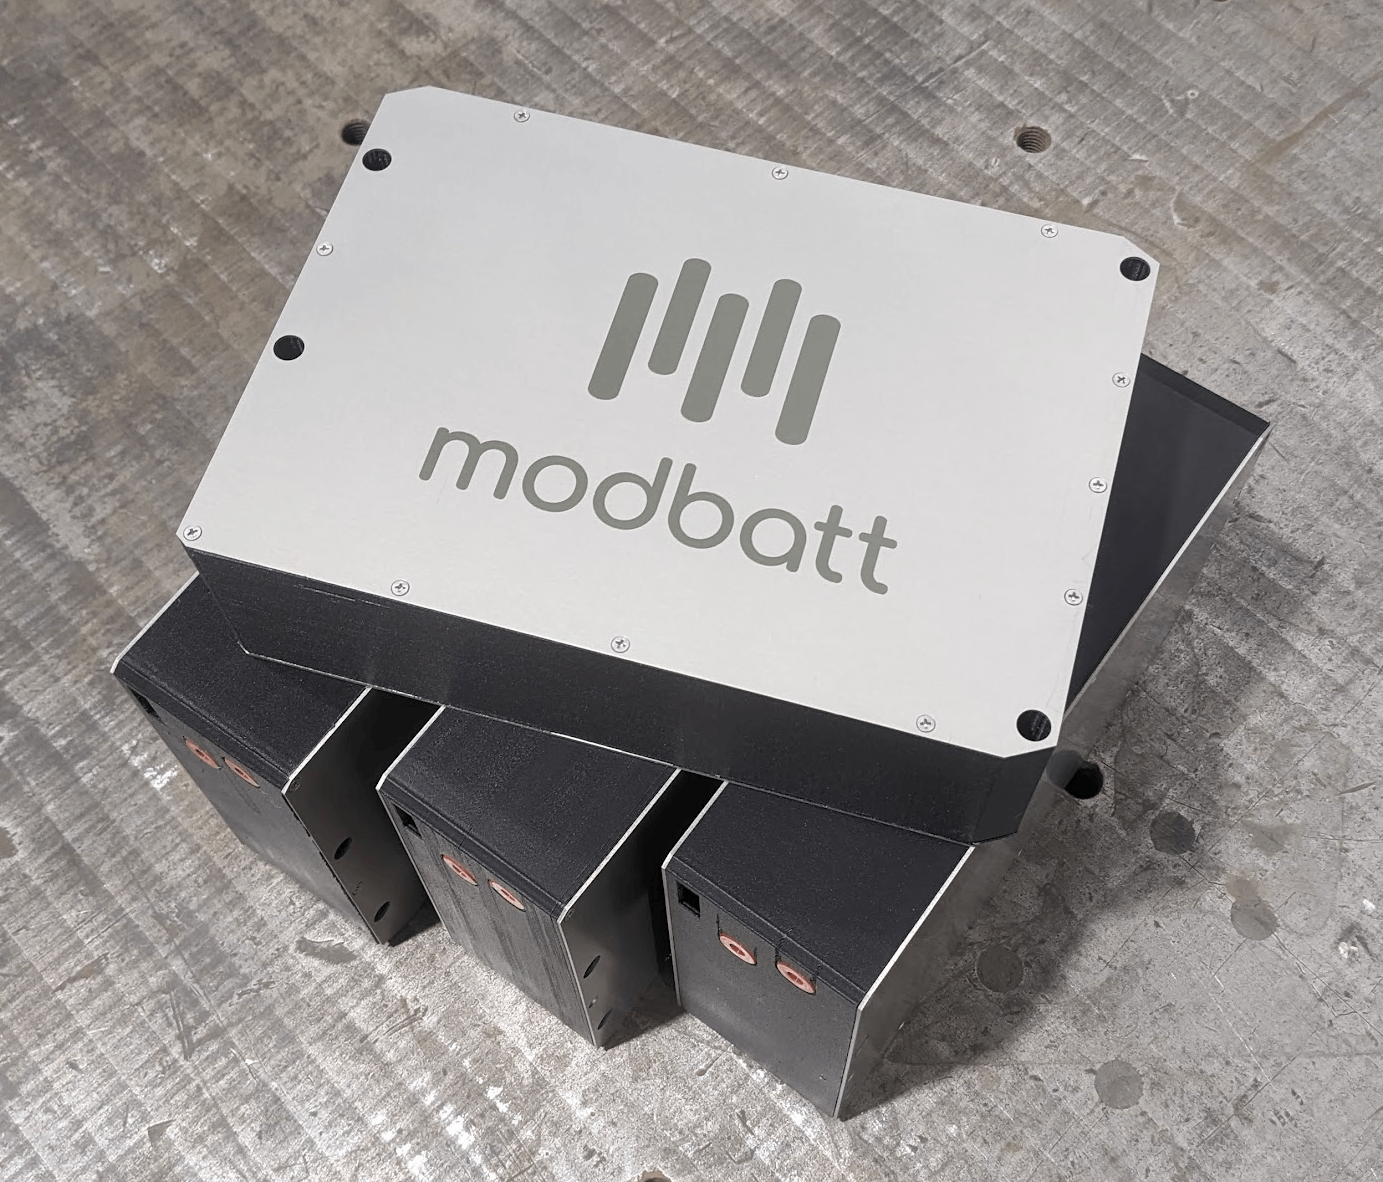 Four Modbatt modules; one sitting on top of the other three.